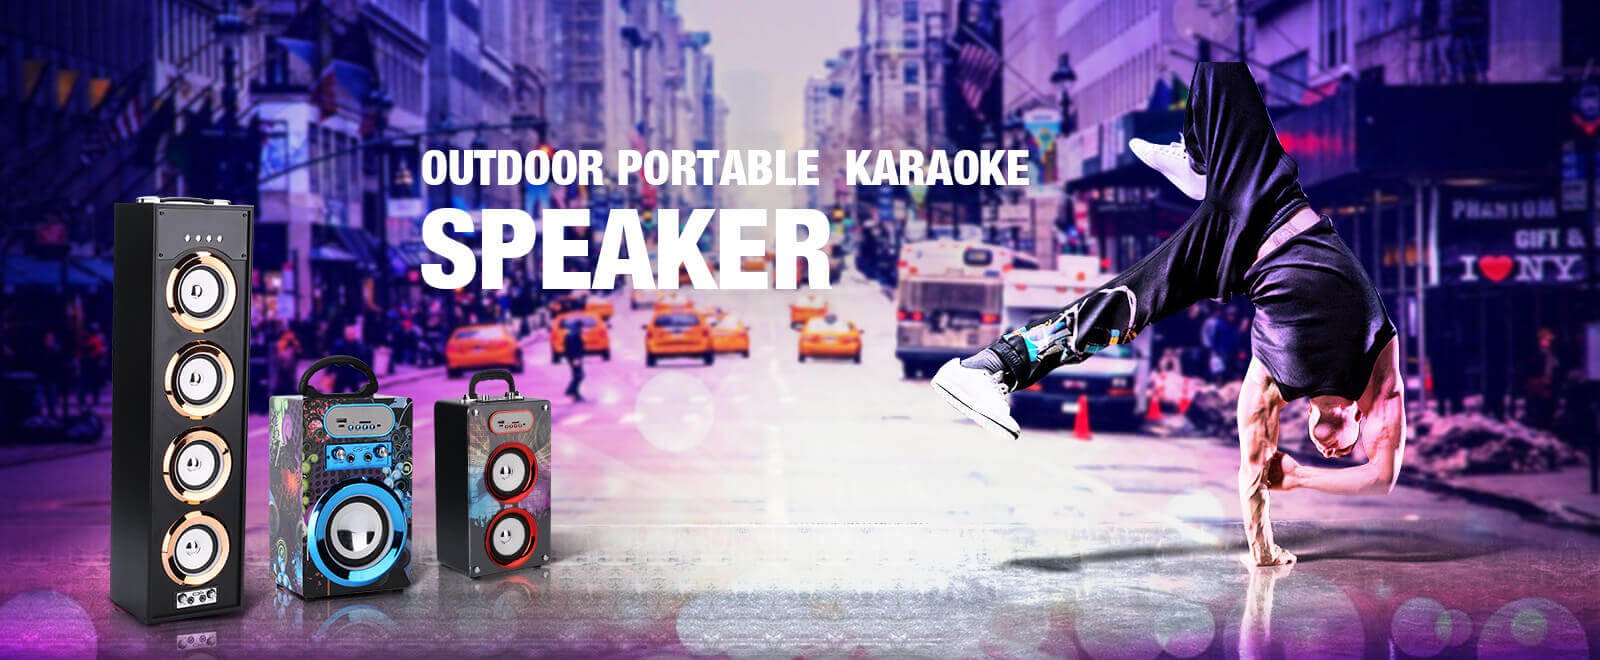 Outdoor Portable Karaoke Speaker